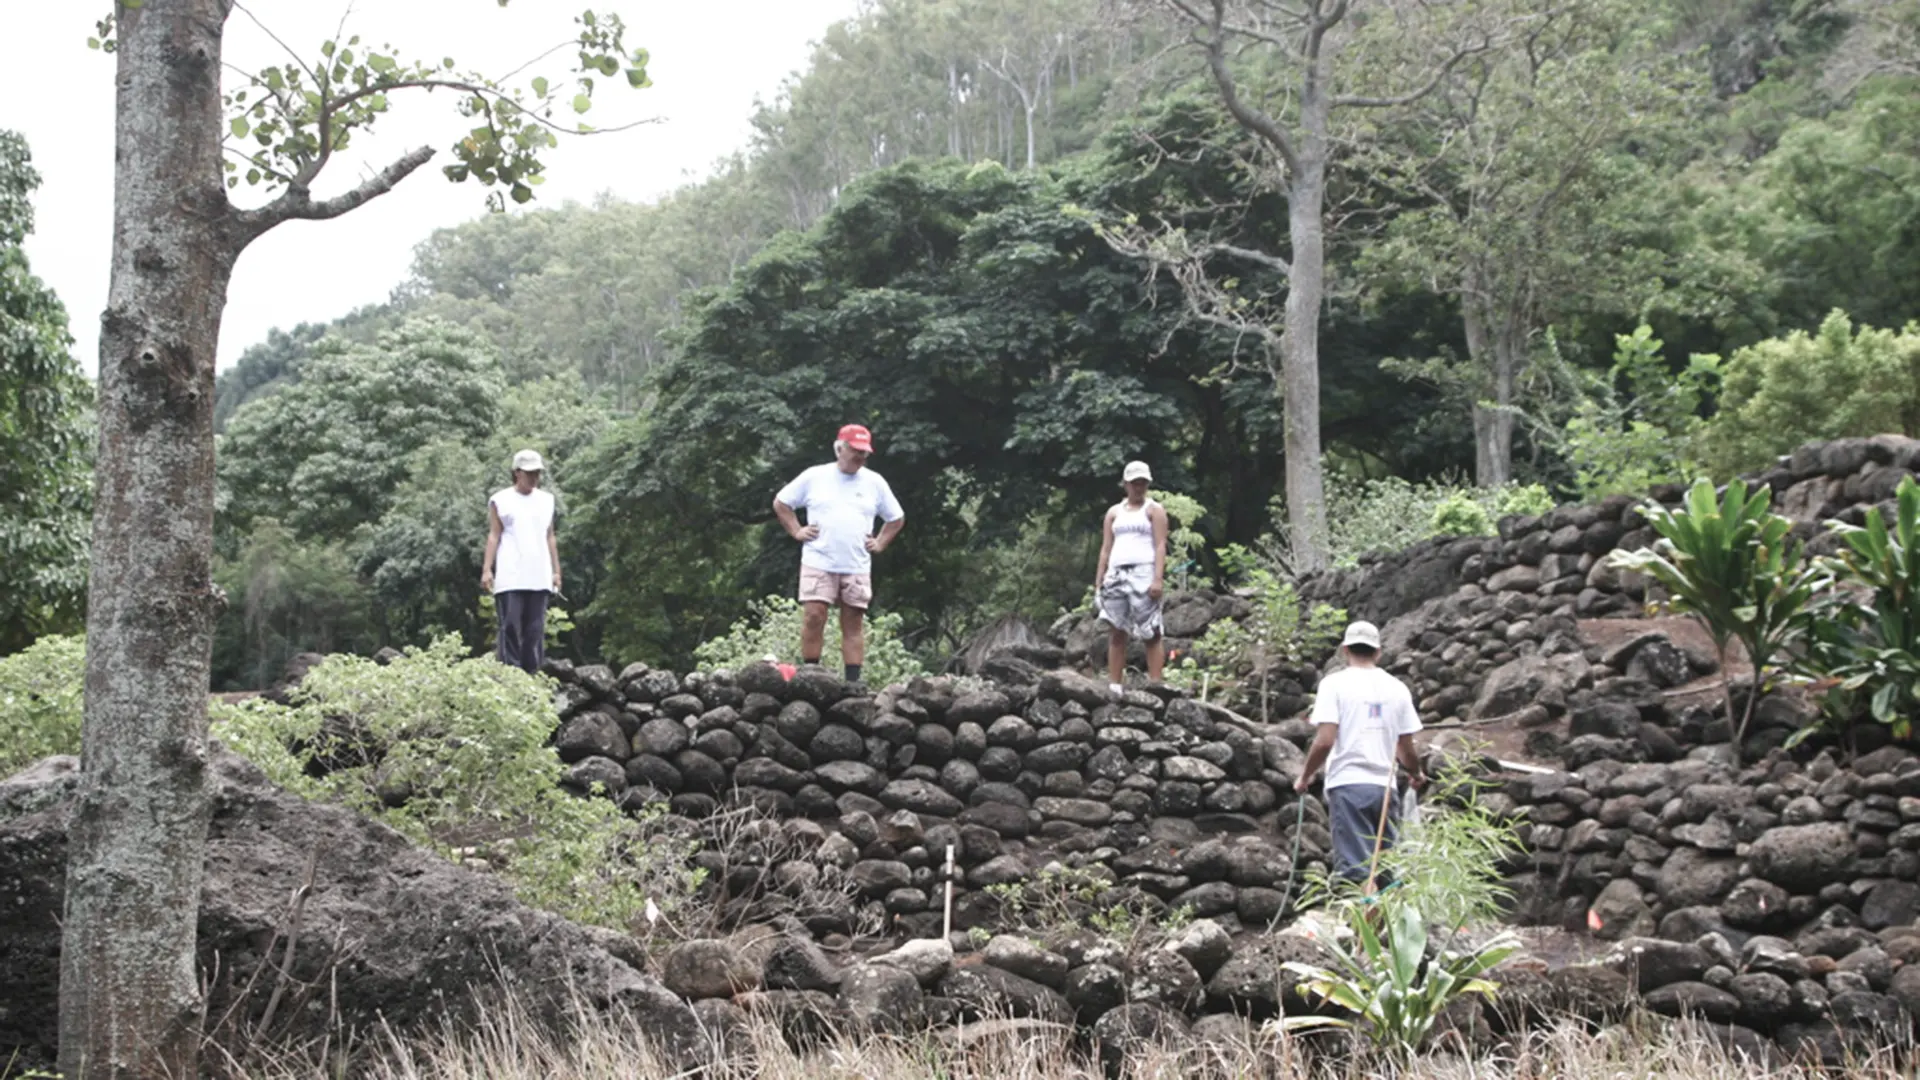 Project Malama Honokowai is focused on restoring the ancient home of a flourishing Hawaiian community over 500 years ago.